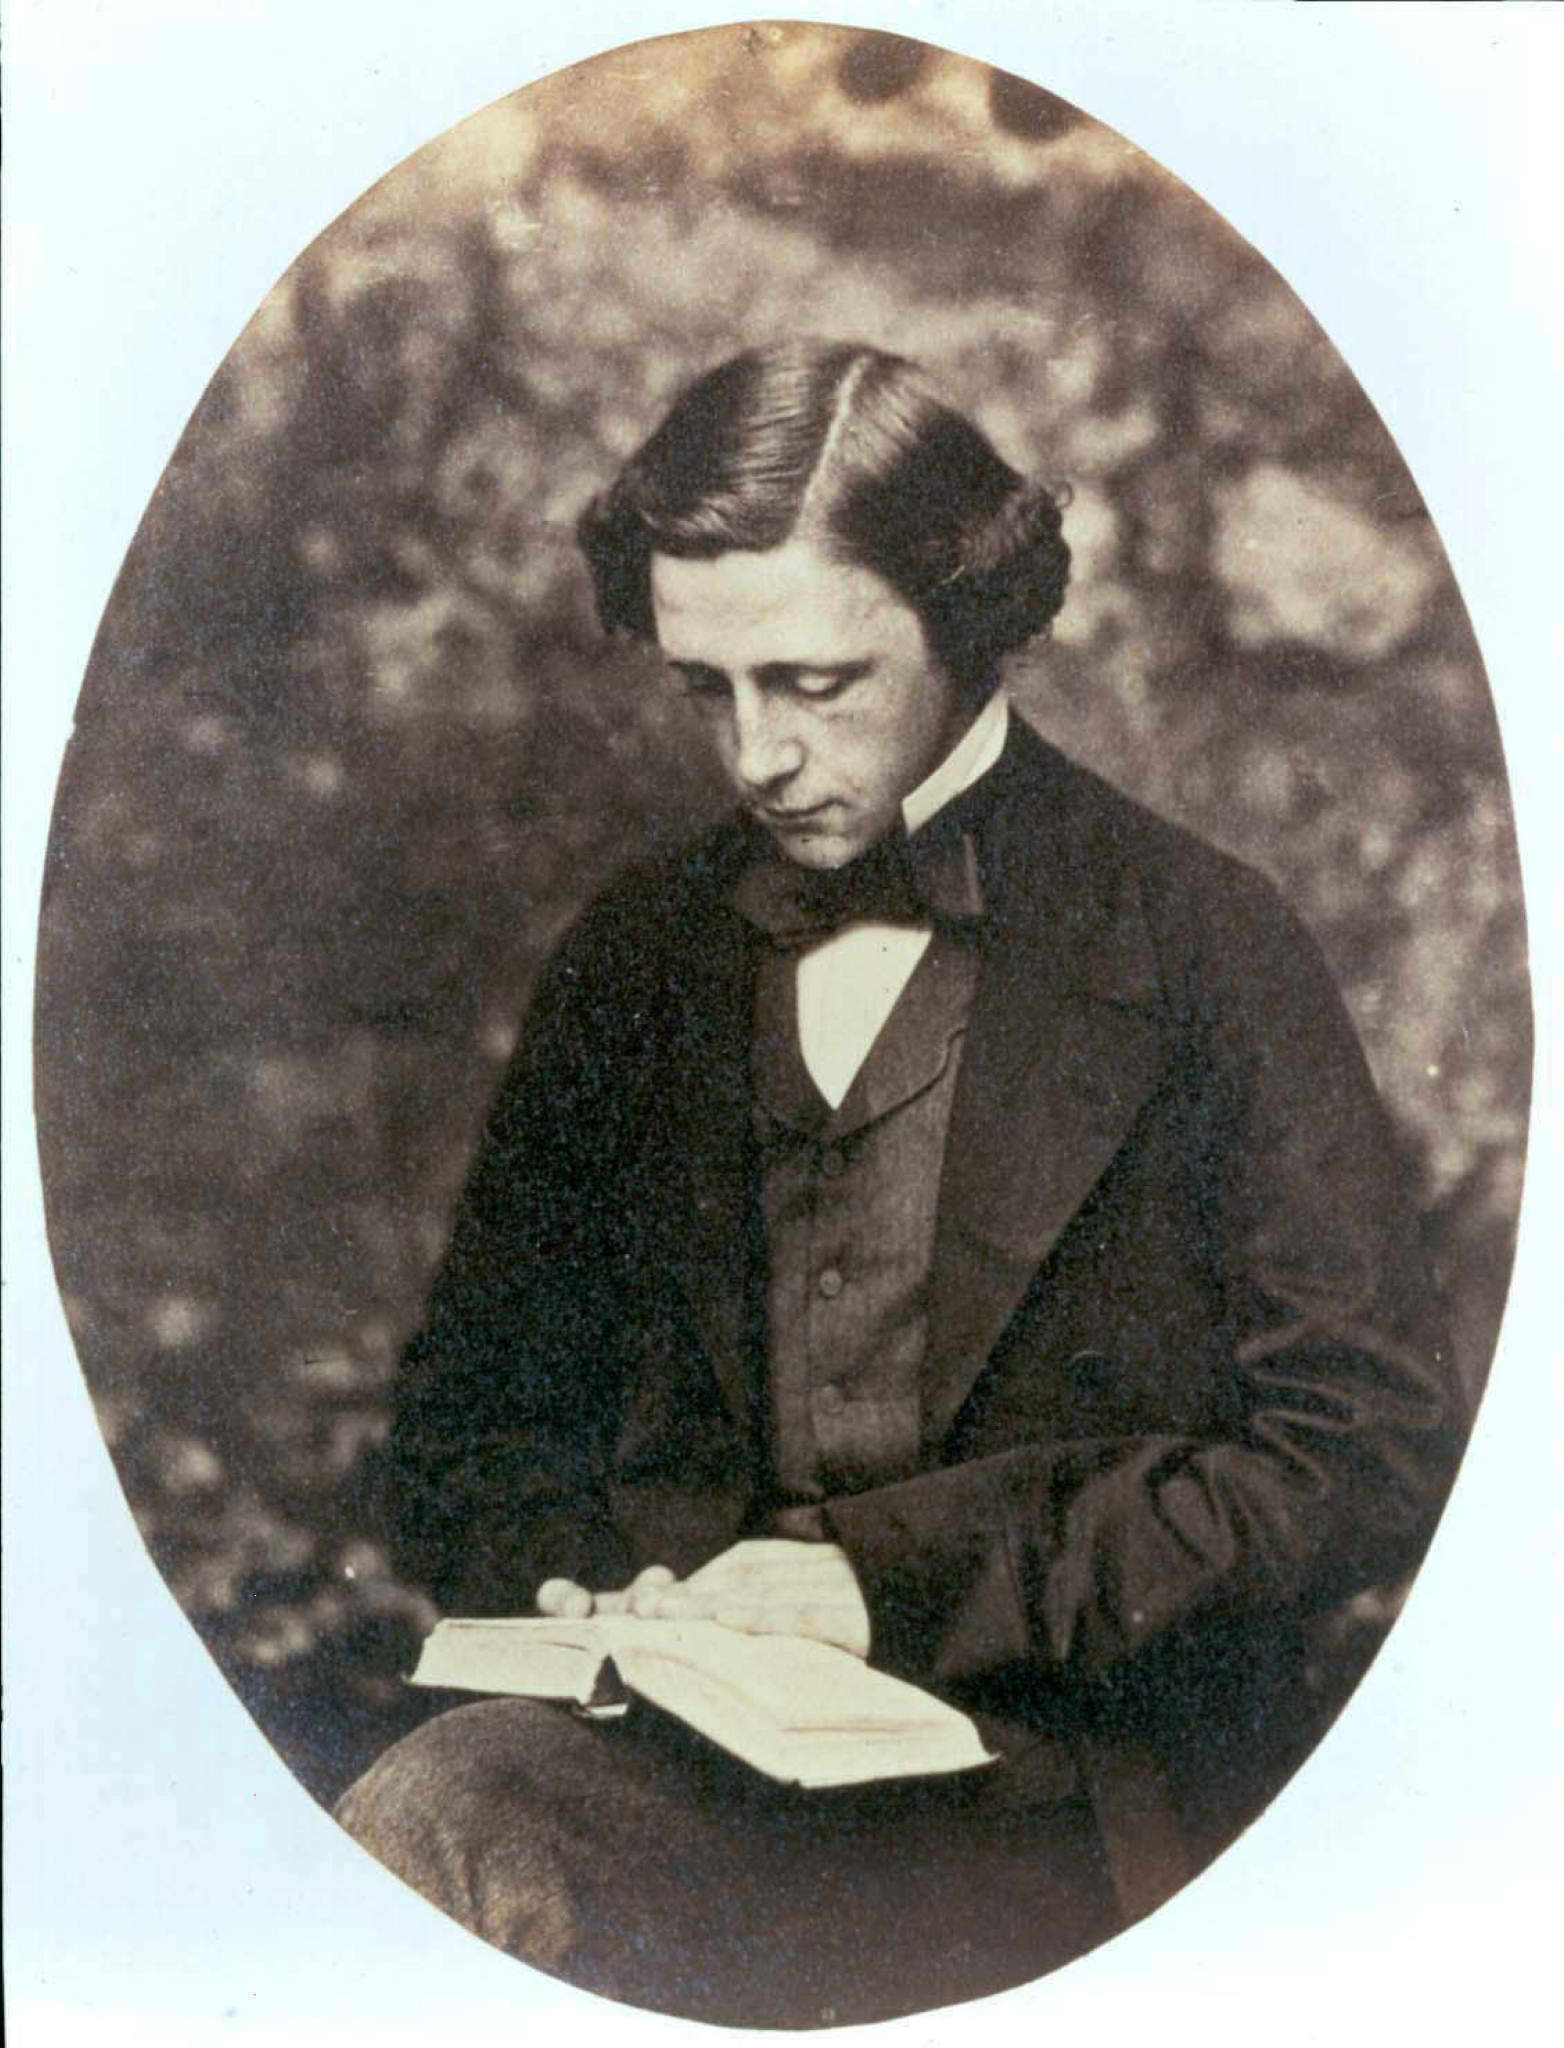 Lewis Carroll - January 27, 1832 - January 14, 1898